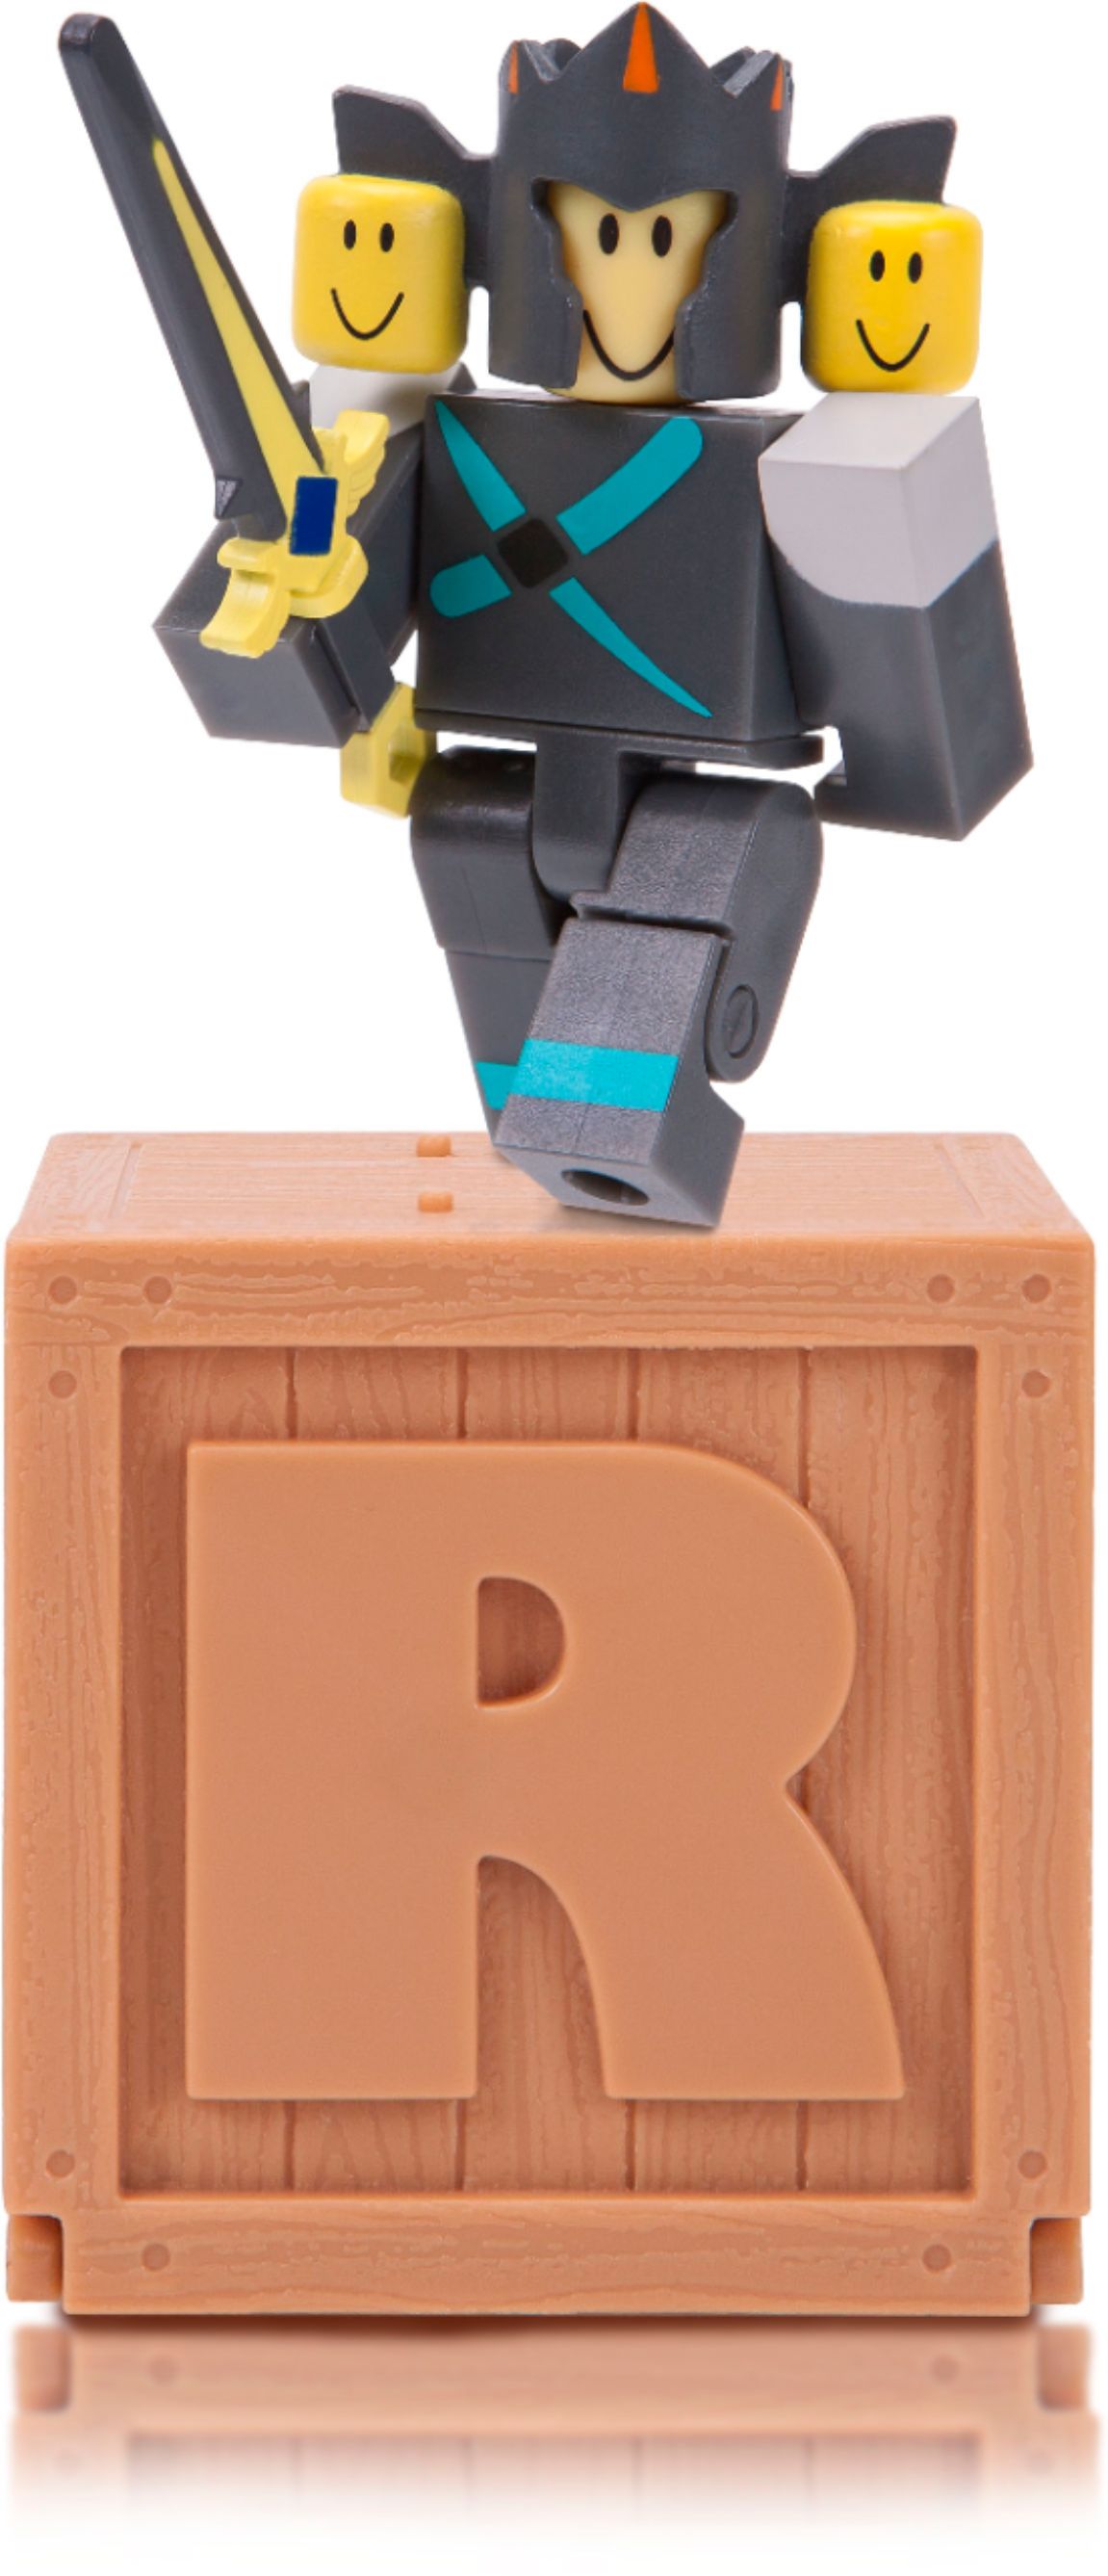 Best Buy Roblox Series 1 Mystery Figure Styles May Vary 10700 - roblox series 1 figures